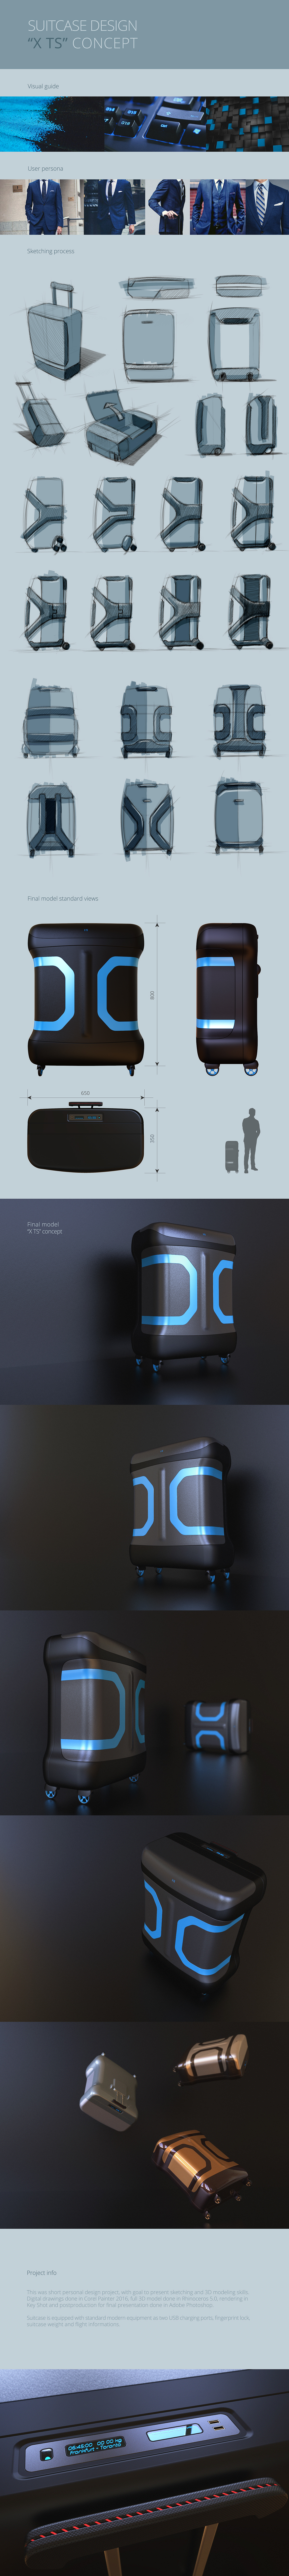 suitcase suitcase design industrial design  product design  black and blue